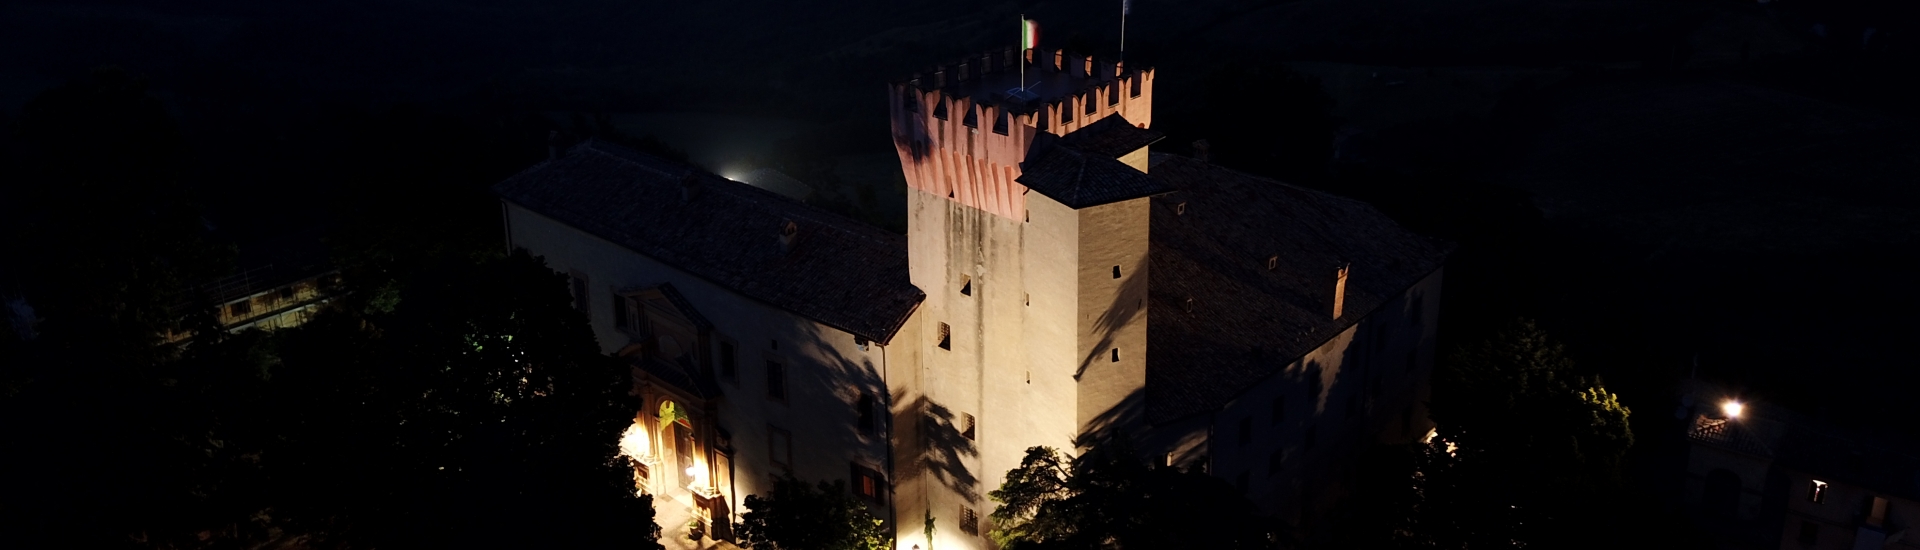 Castello di Guiglia - Castello di Guiglia con Panorama photo credits: |Mauroriccio| - https://it.wikipedia.org/wiki/Guiglia#/media/File:Castello_di_Guigli_con_panorama.jpg